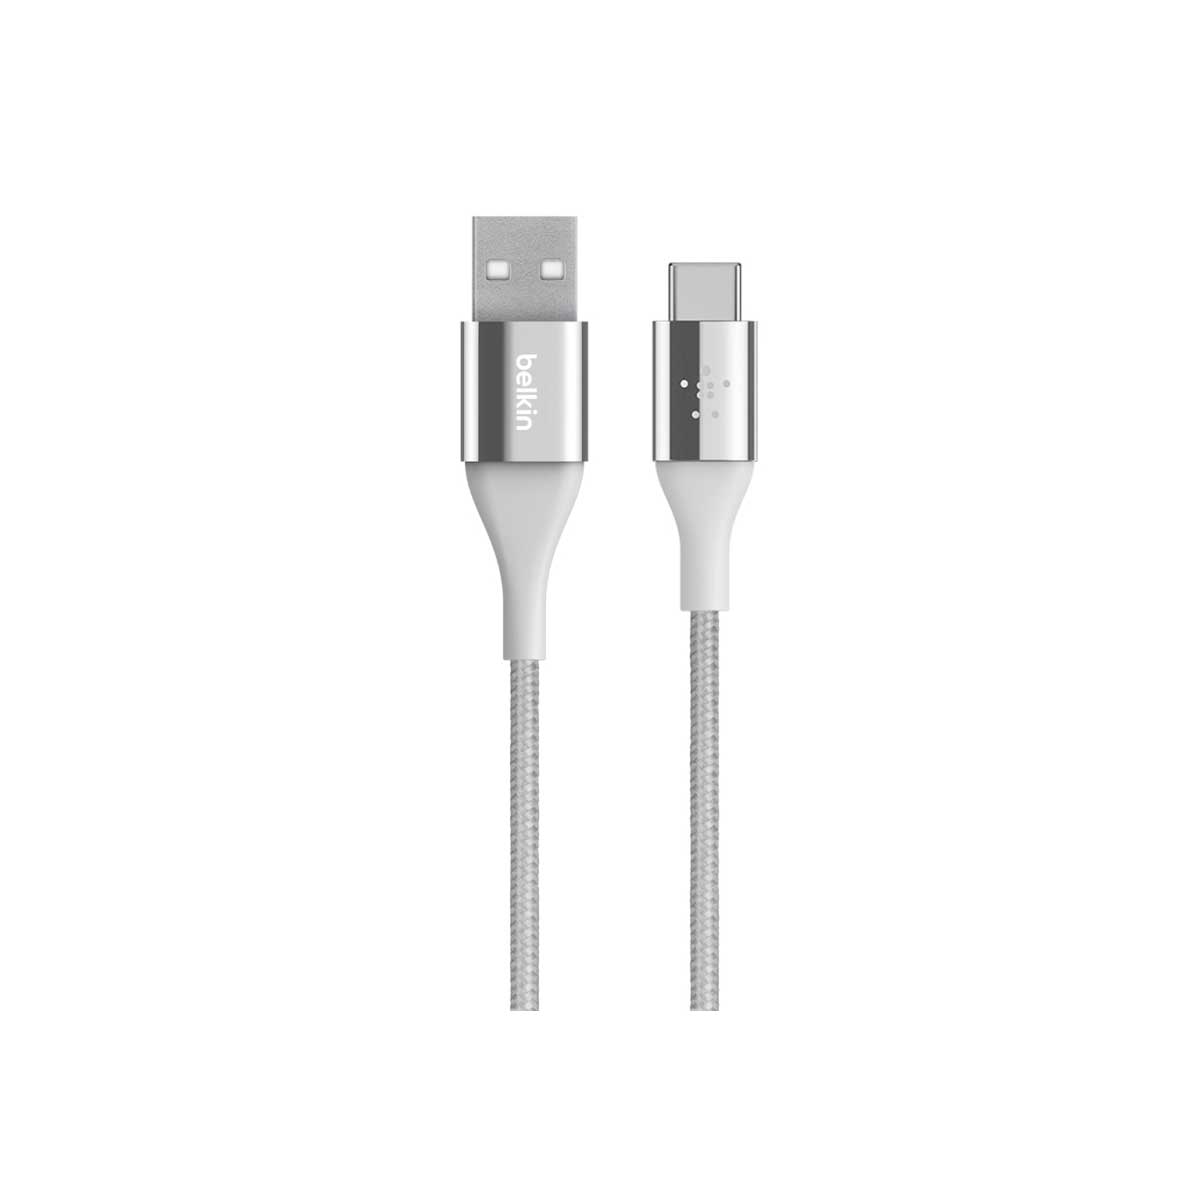 Belkin Premium Kevlar Cable USB-C 4FT - Silver